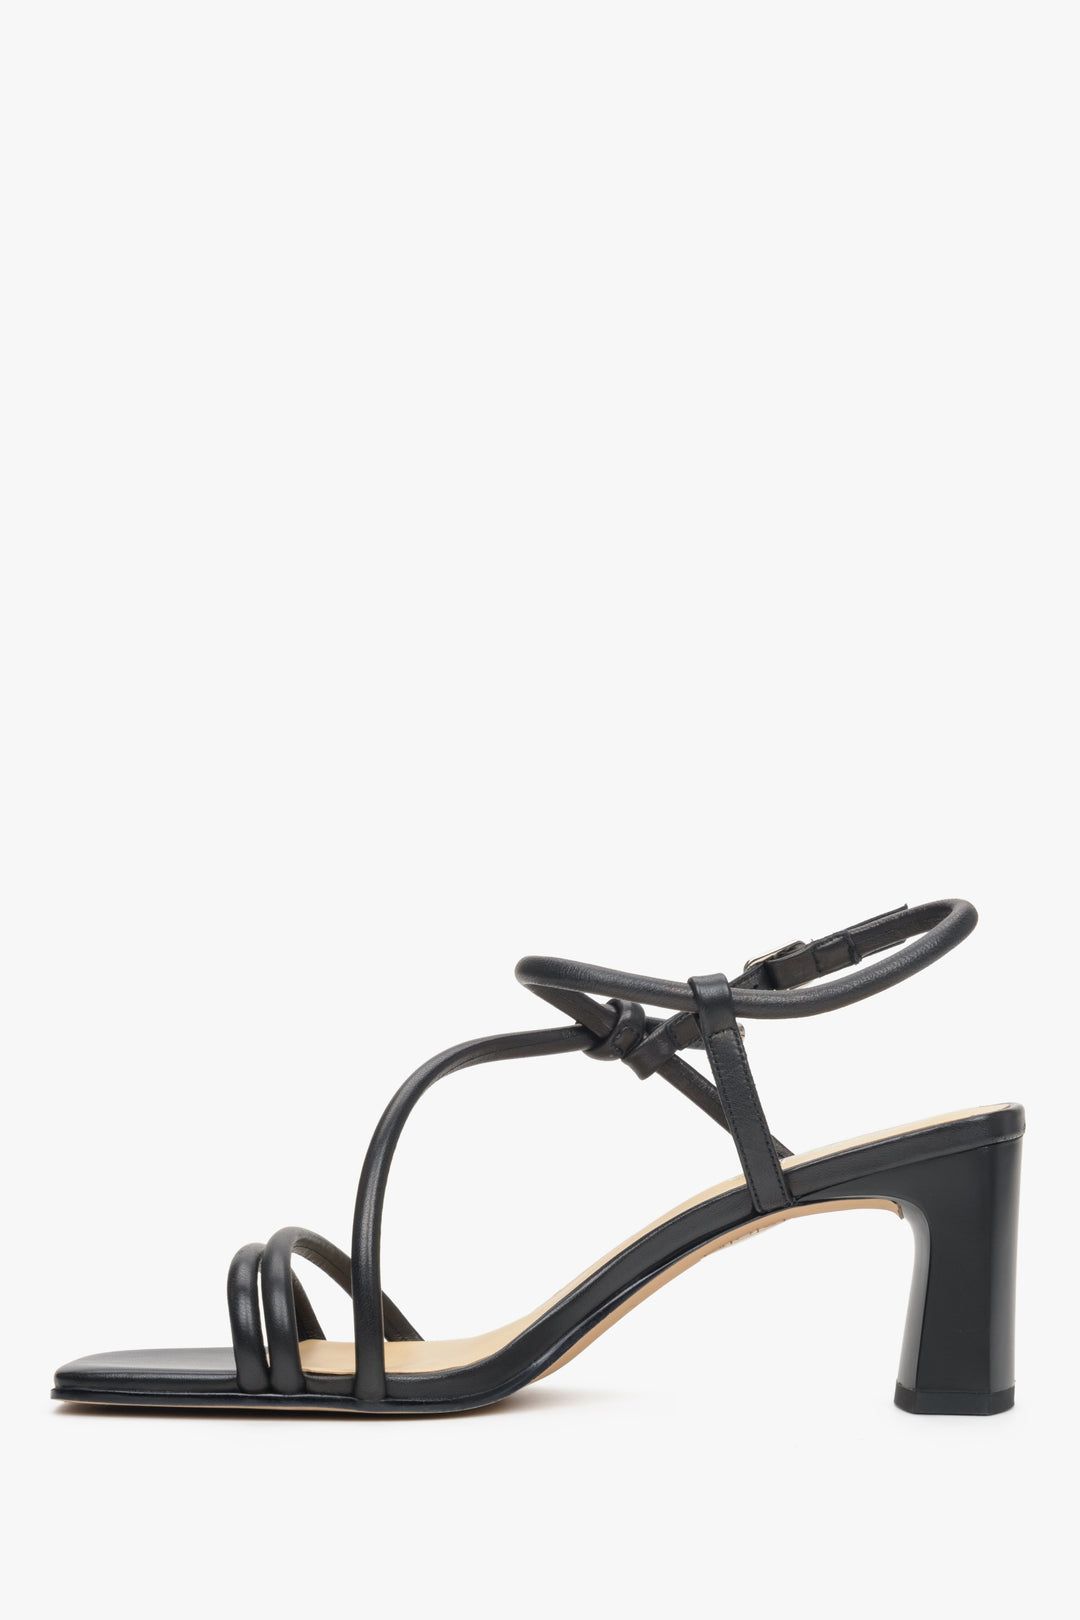 Block heel strappy women's sandals in black, Estro brand.